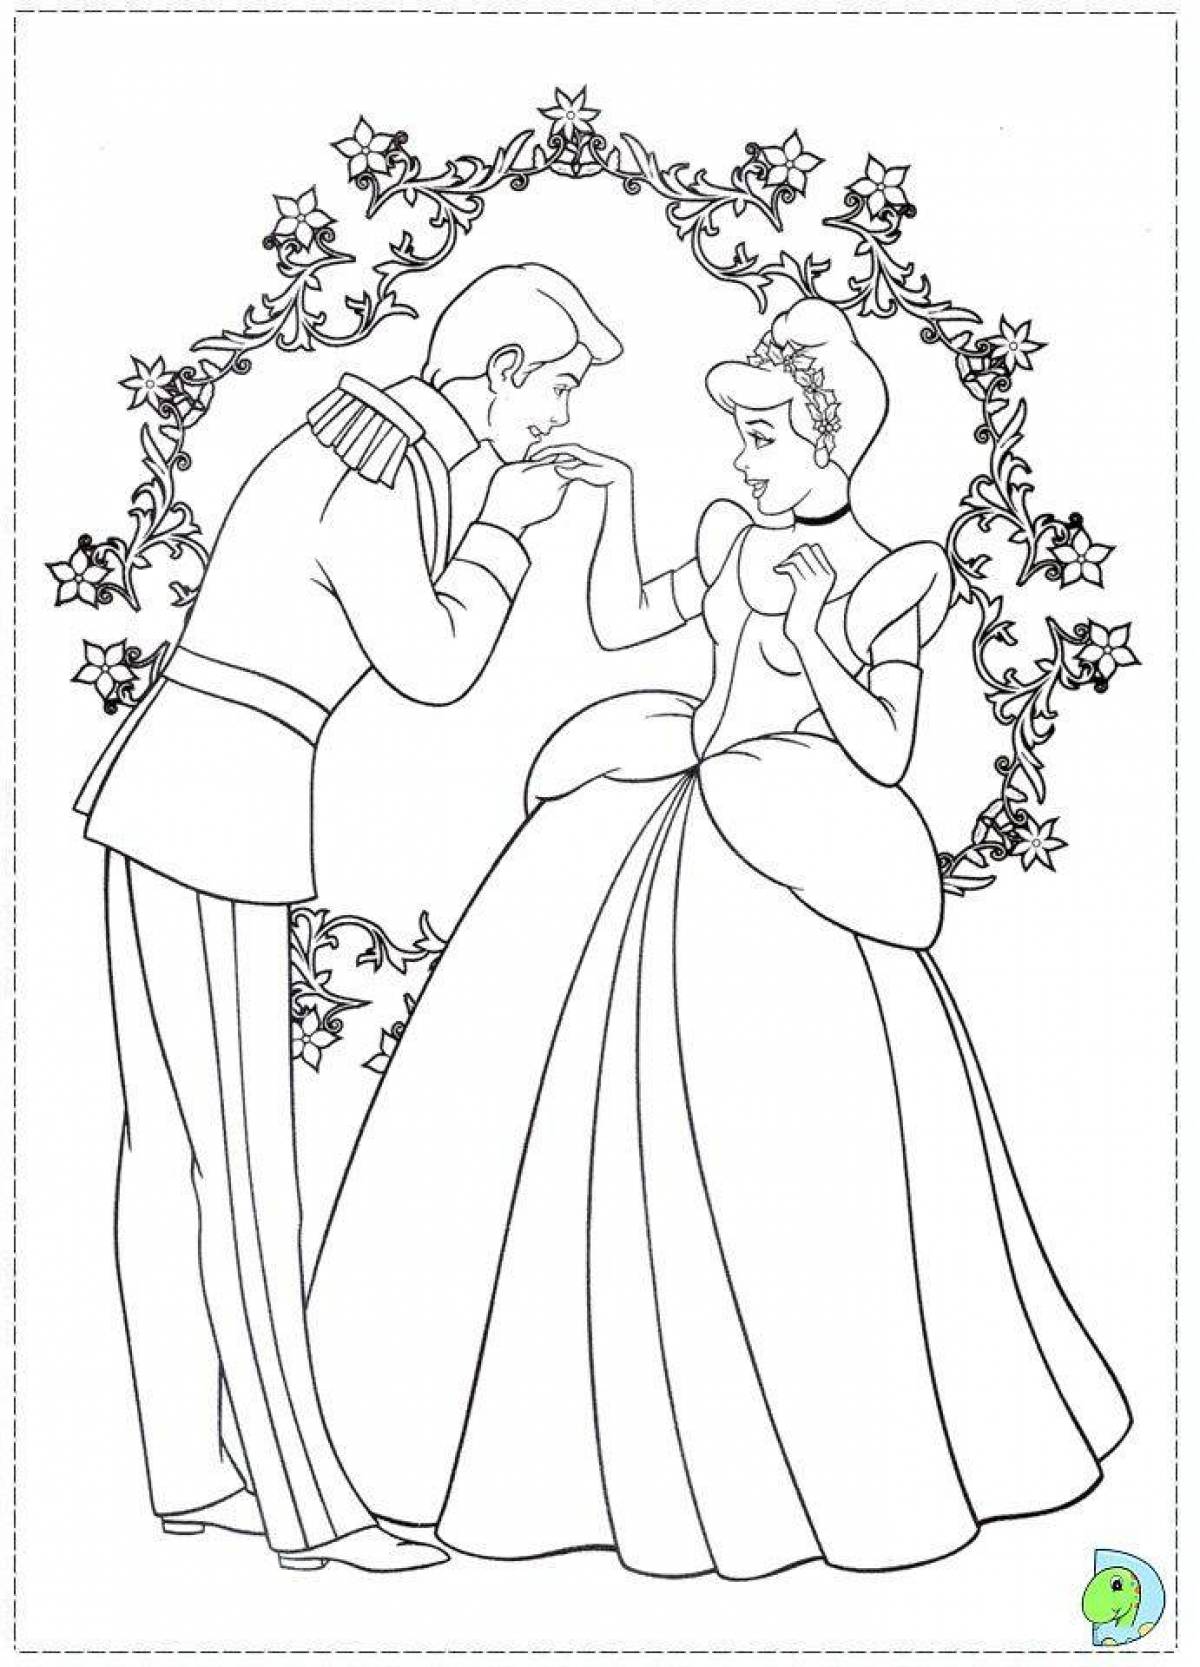 Exquisite Cinderella coloring book for kids